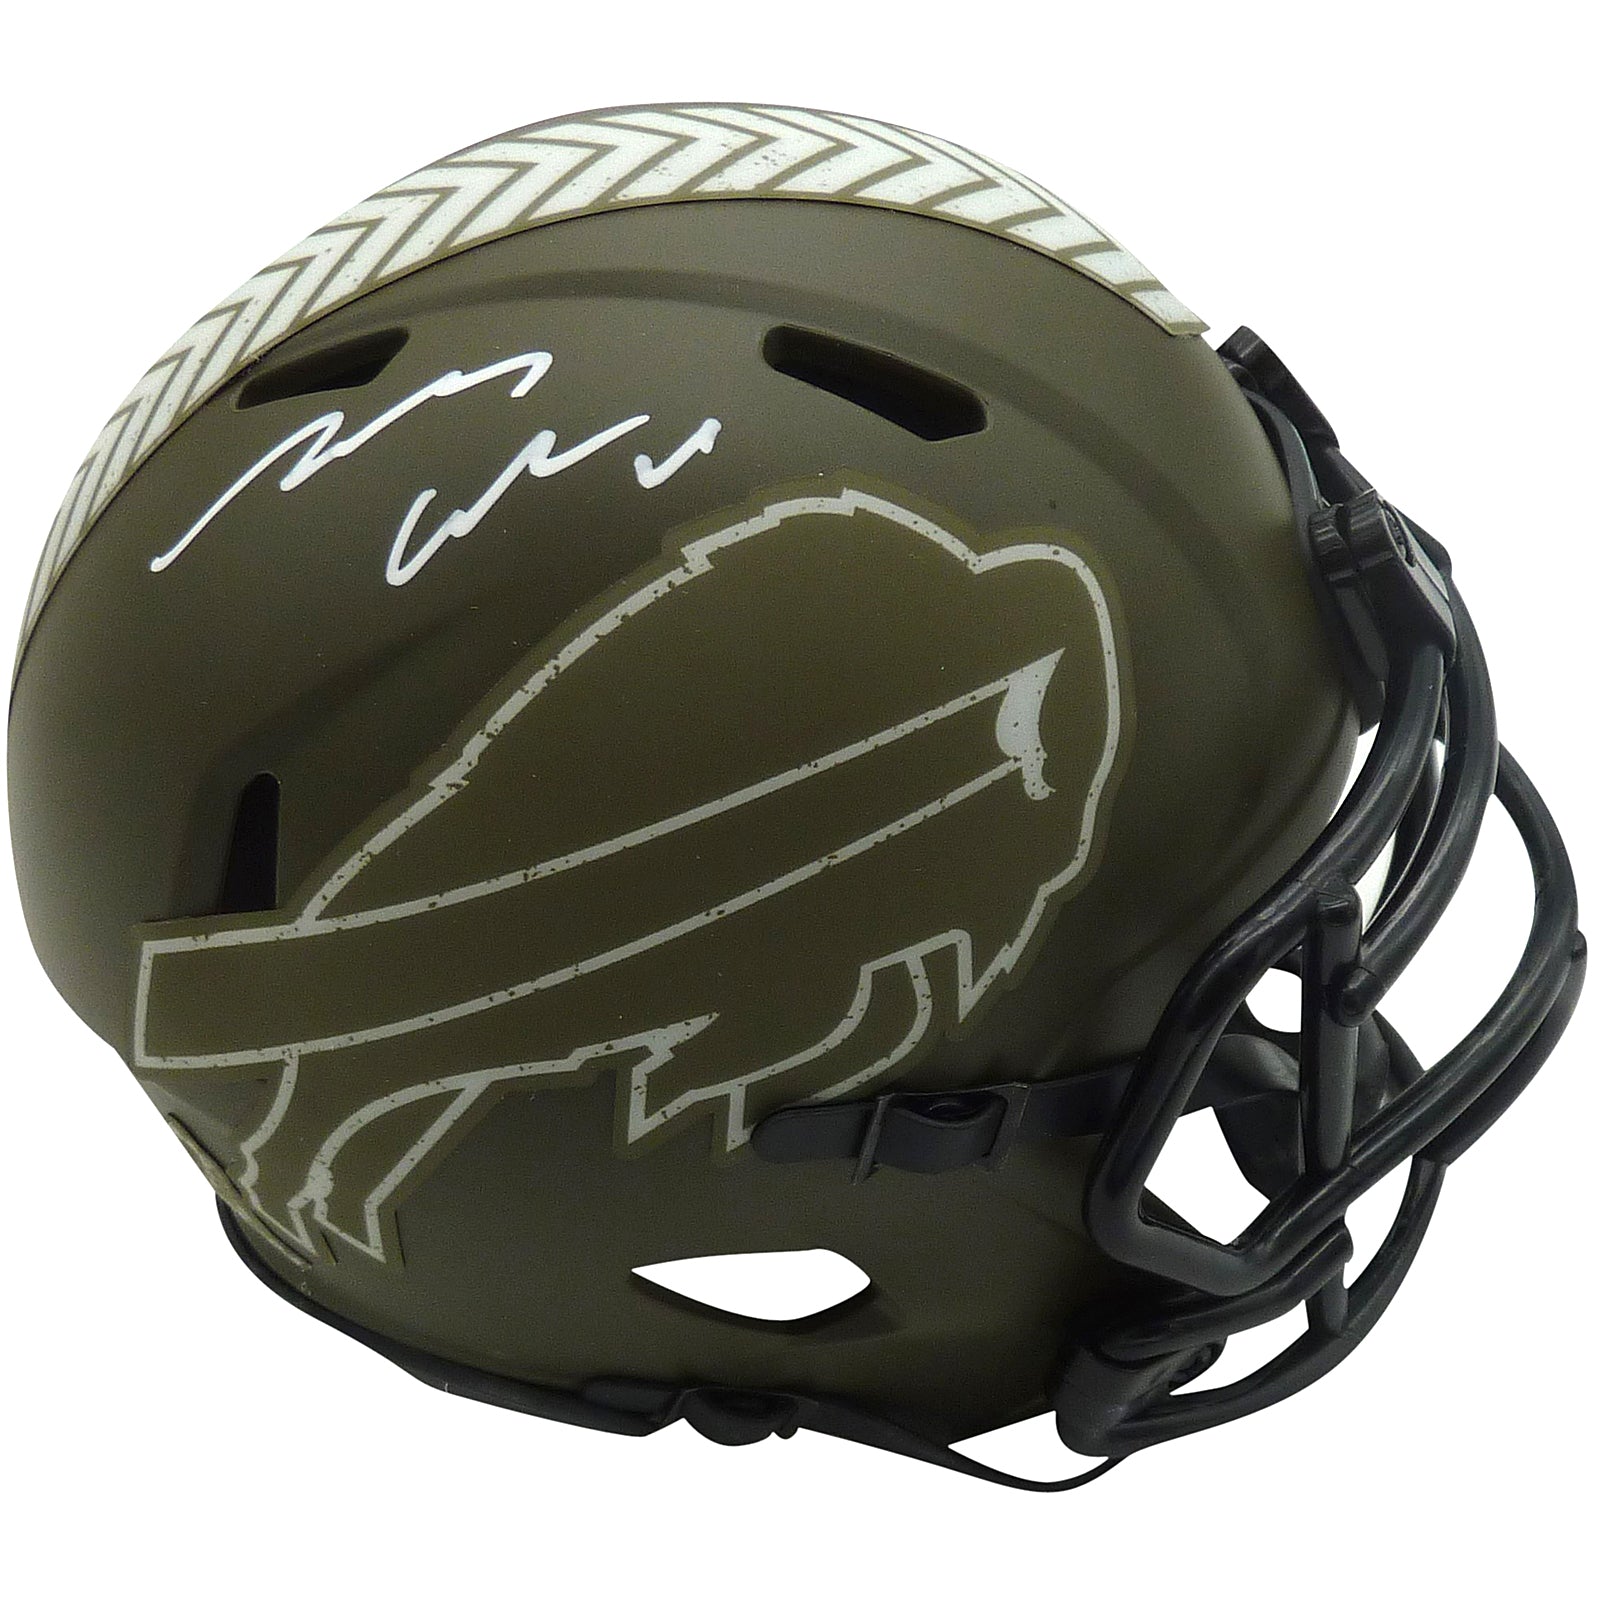 James Cook Autographed Buffalo Bills (Salute to Service) Mini Helmet - JSA